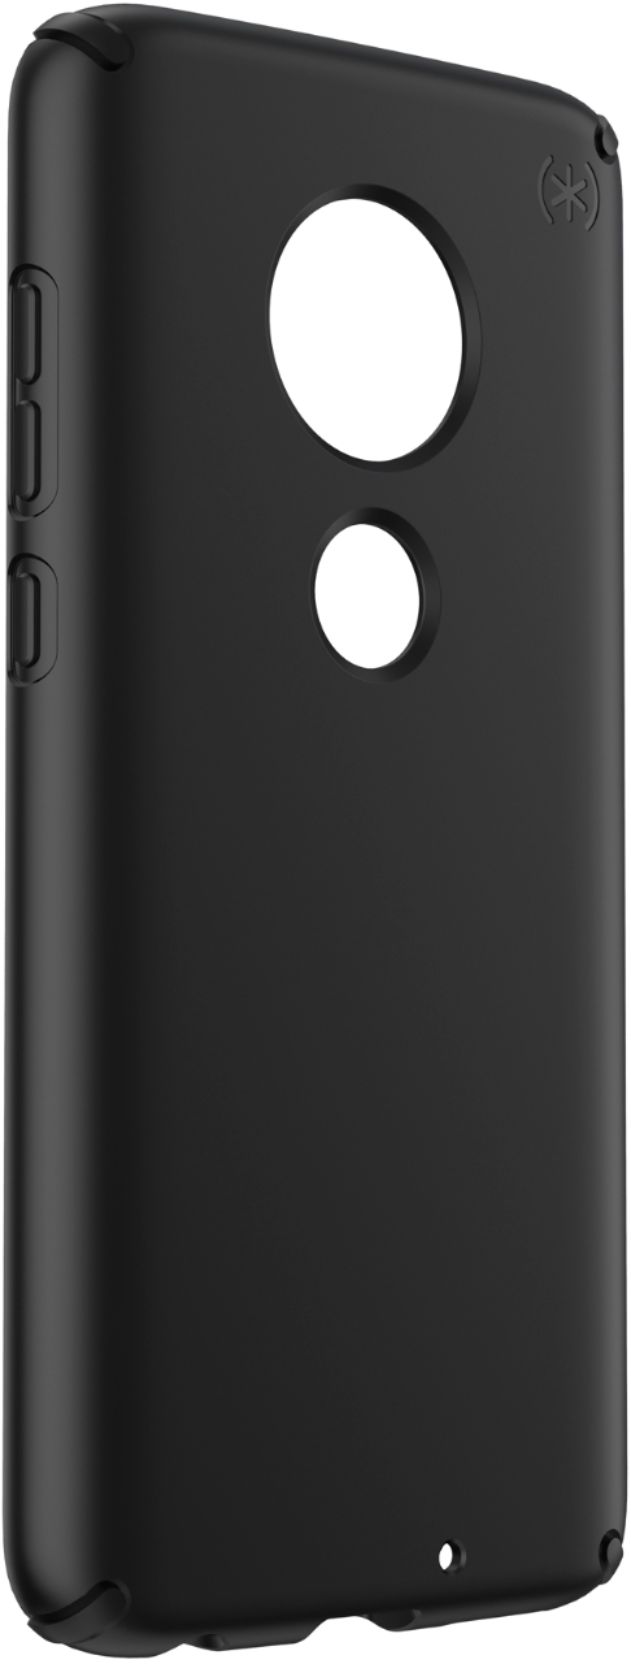 Angle View: Speck - Presidio LITE Case for Motorola Moto G7 - Black